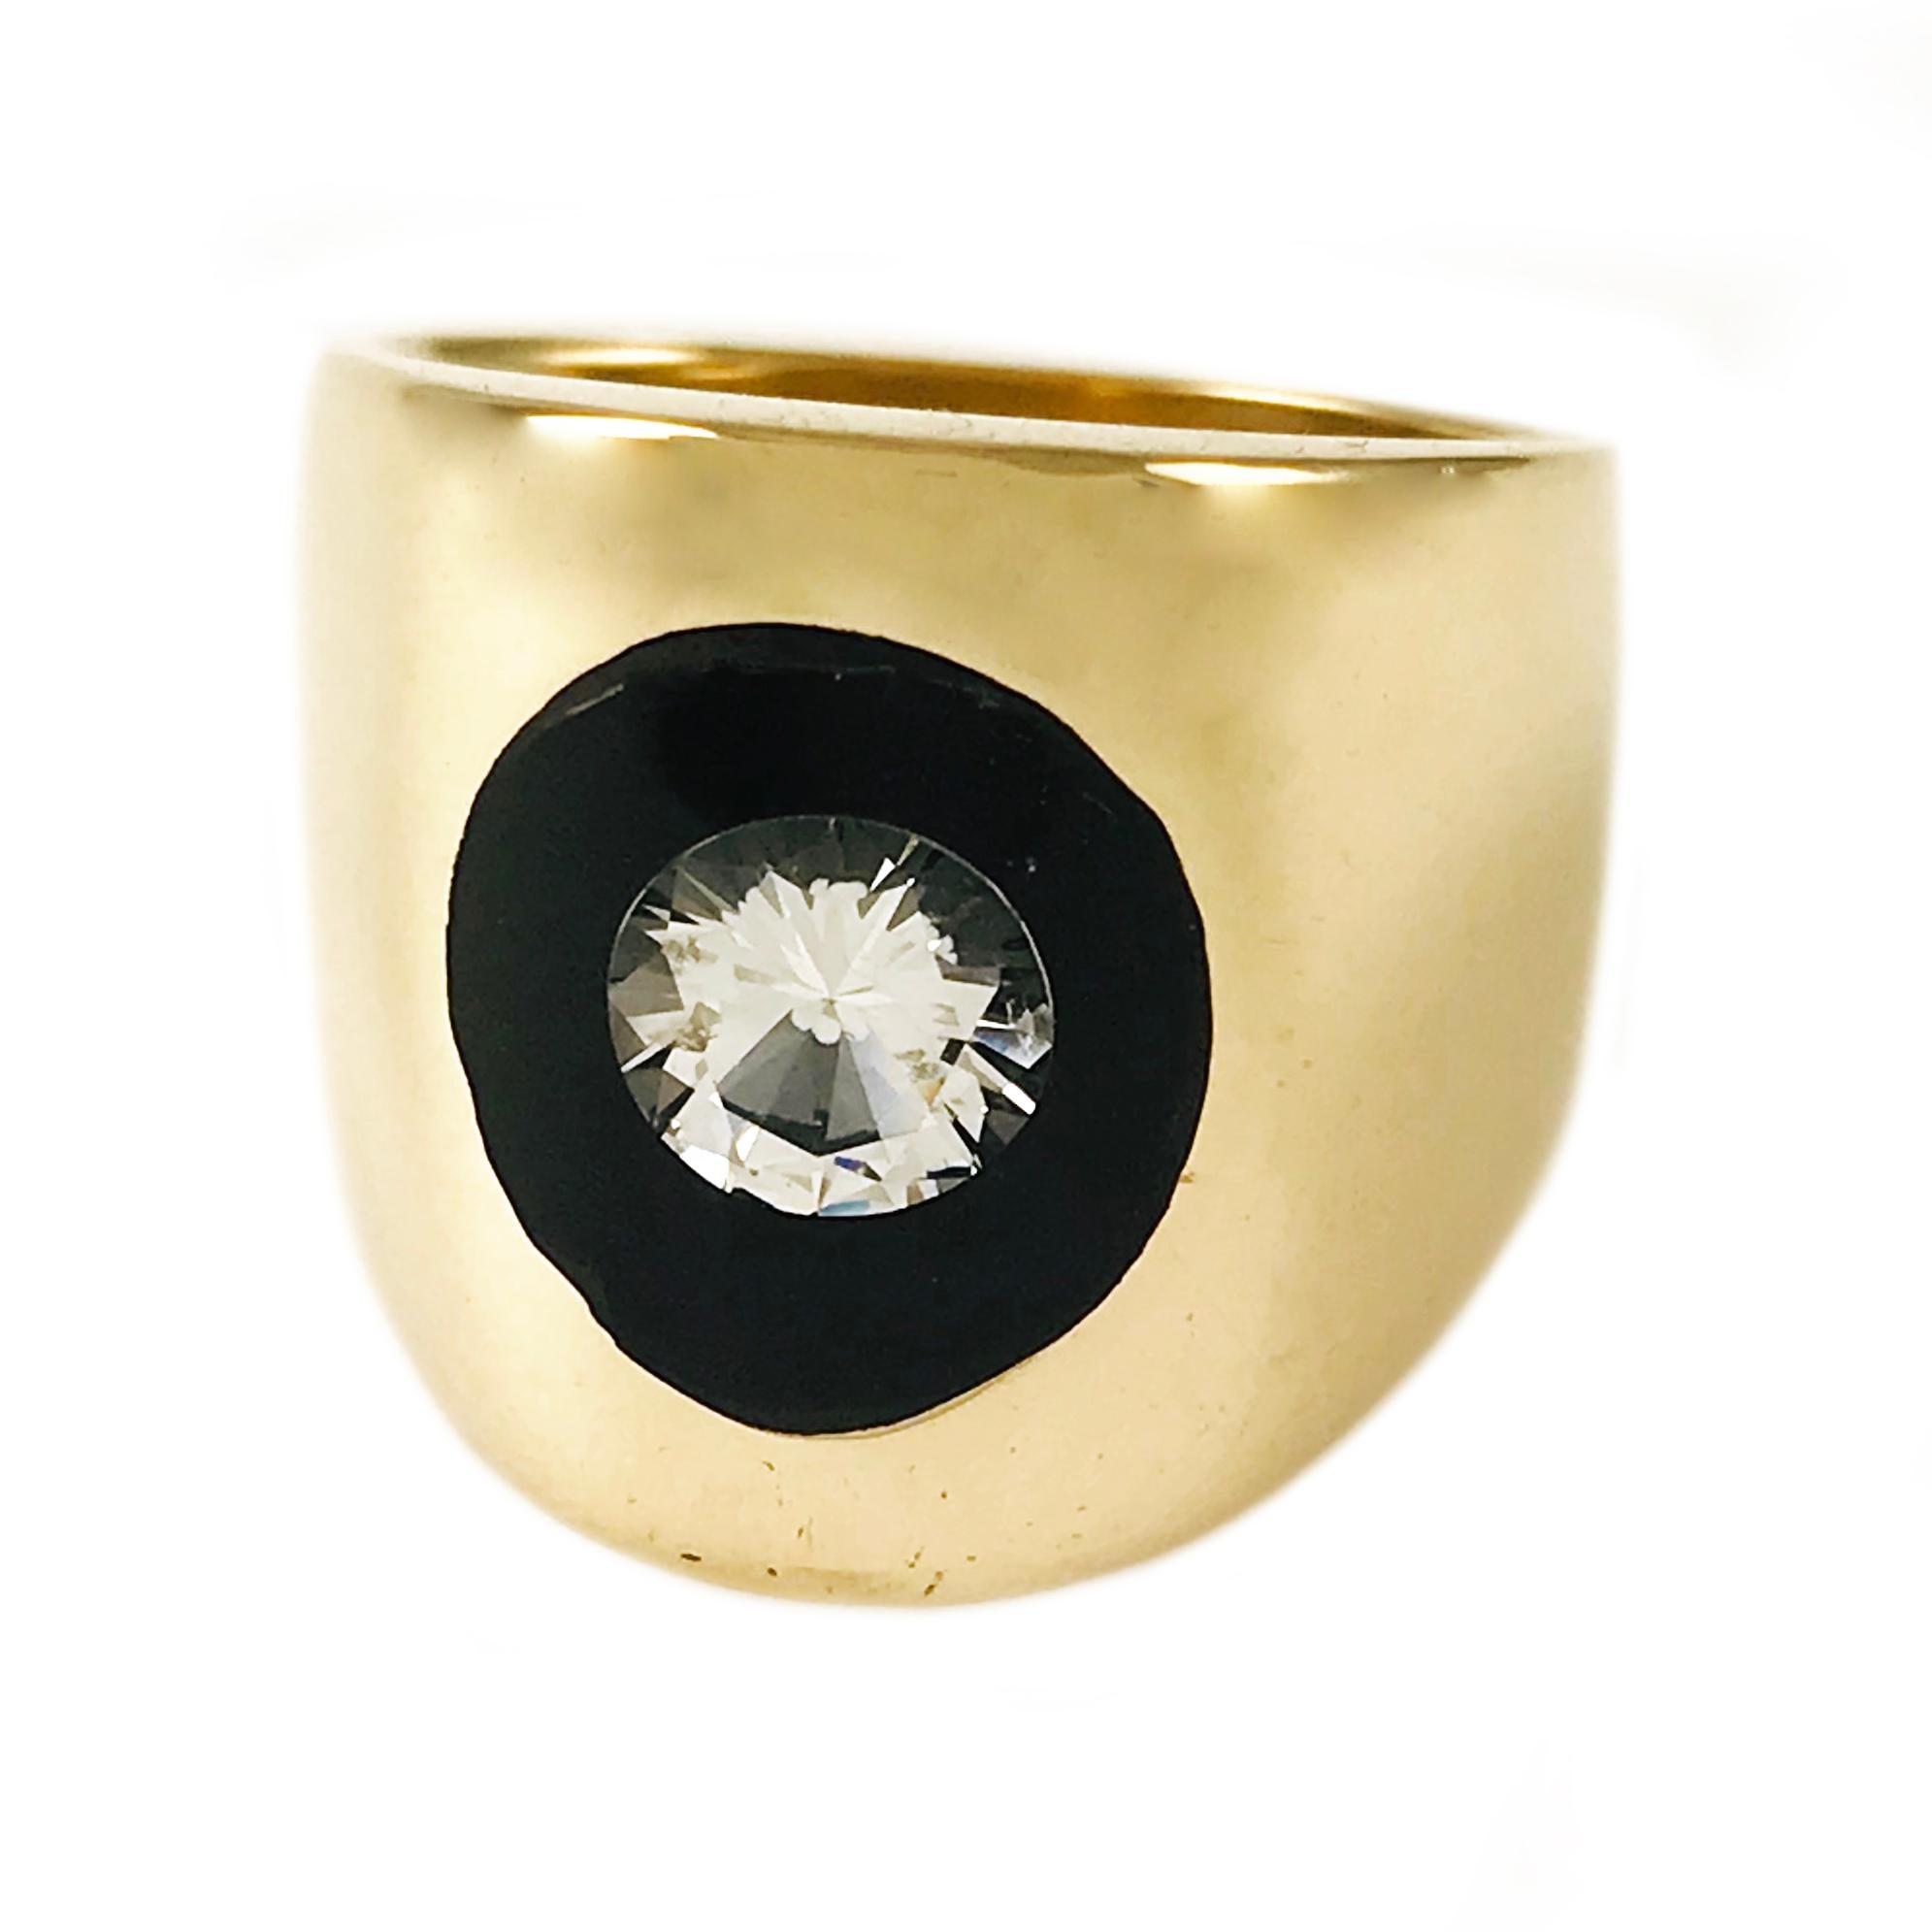 Incogem Floating Diamond Lucite Ring - 0.50 Carat Size 9.5